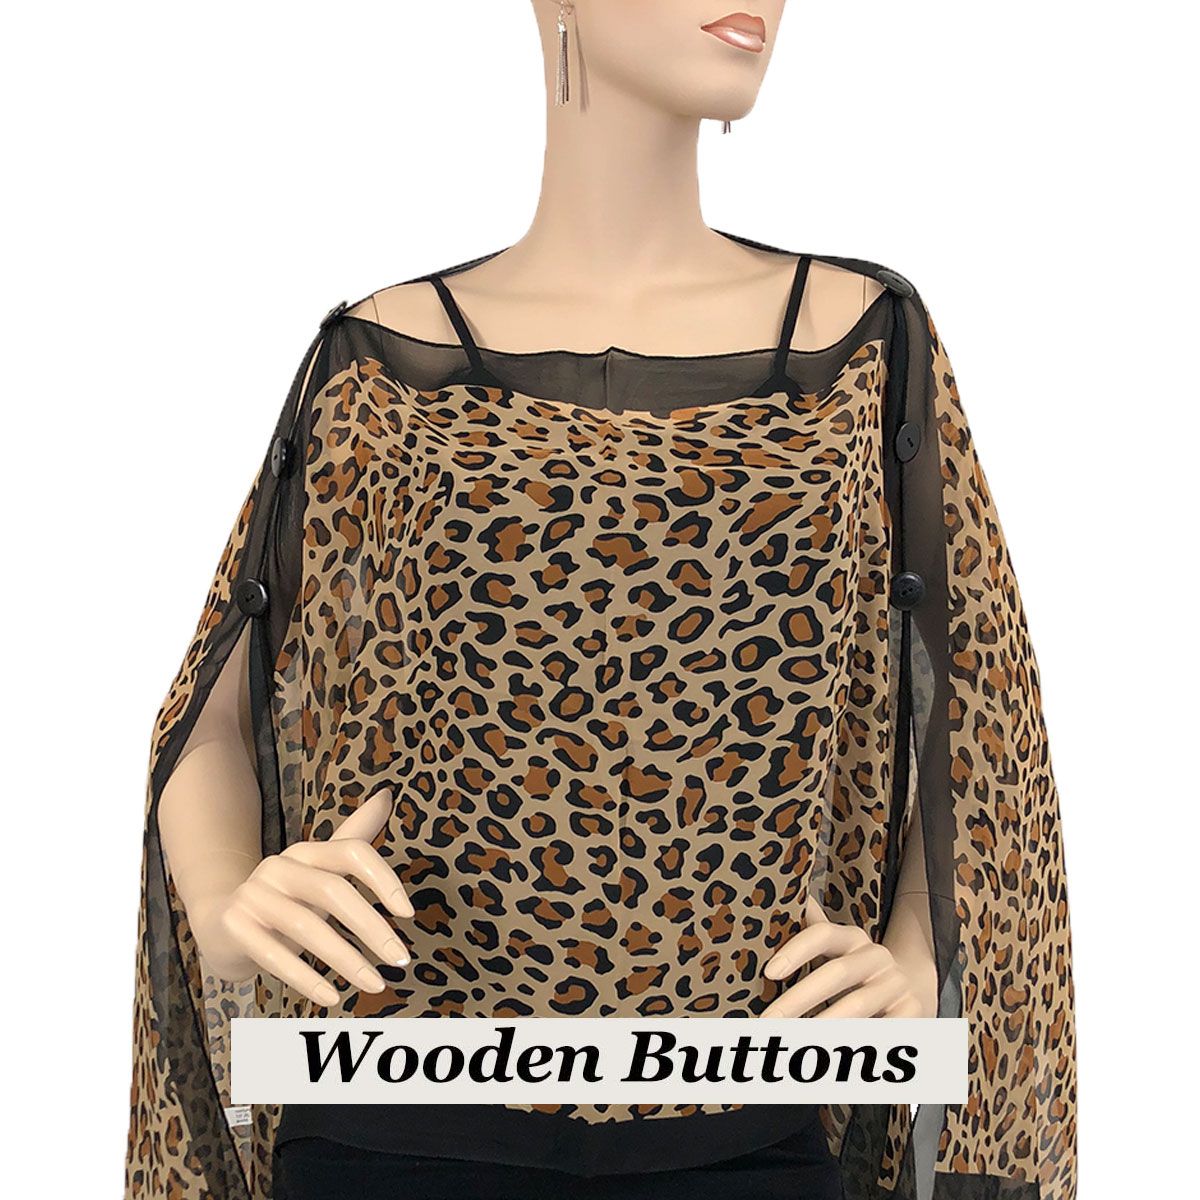 104BK - Wooden Buttons<br> Cheetah Black Border 